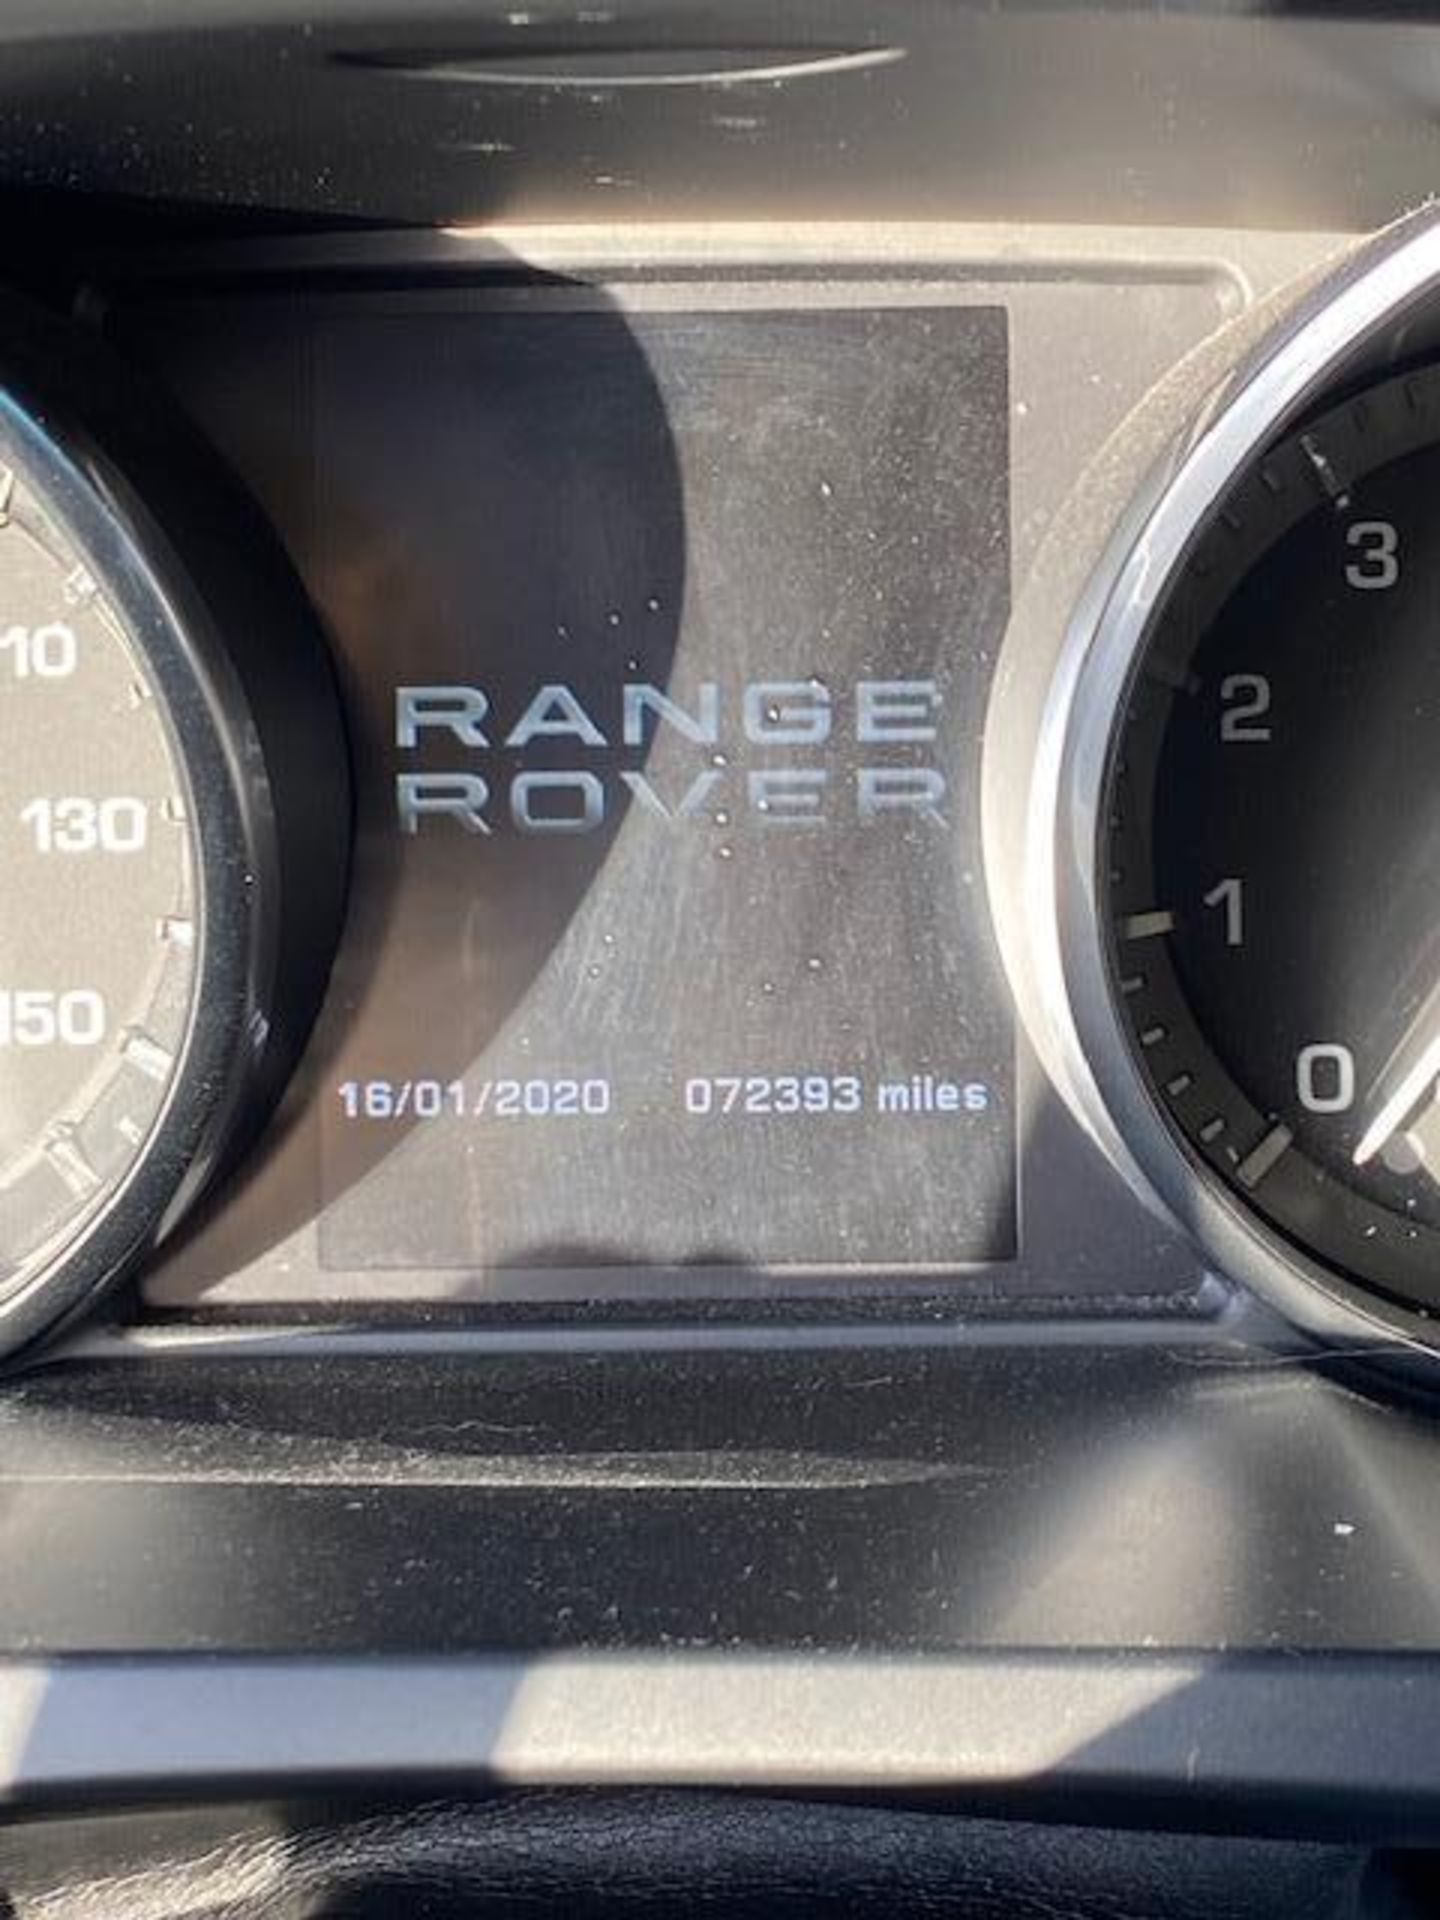 2015 RANGE ROVER EVOQUE SUV, LEATHER INTERIOR, 72,393 MILES, POWER WINDOWS & LOCKS, LARGE MOON ROOF - Bild 12 aus 20